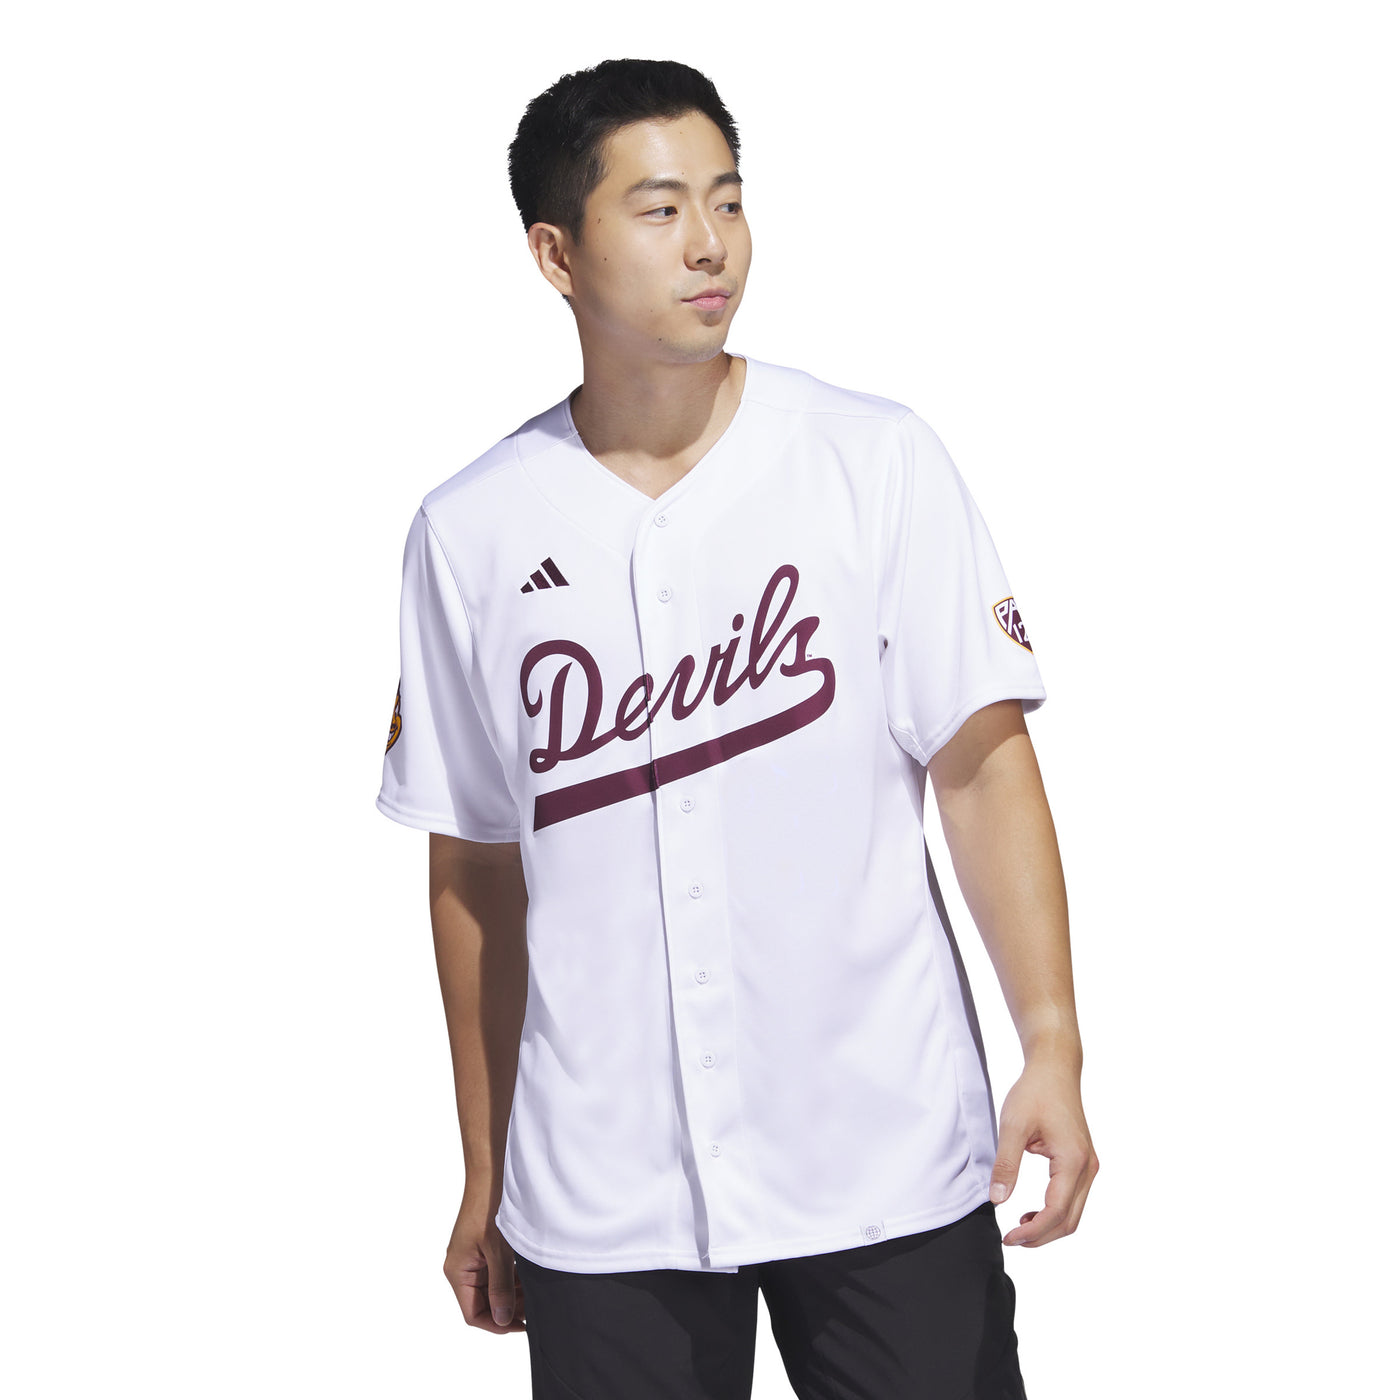 Adidas Men's White Script Replica Baseball Jersey